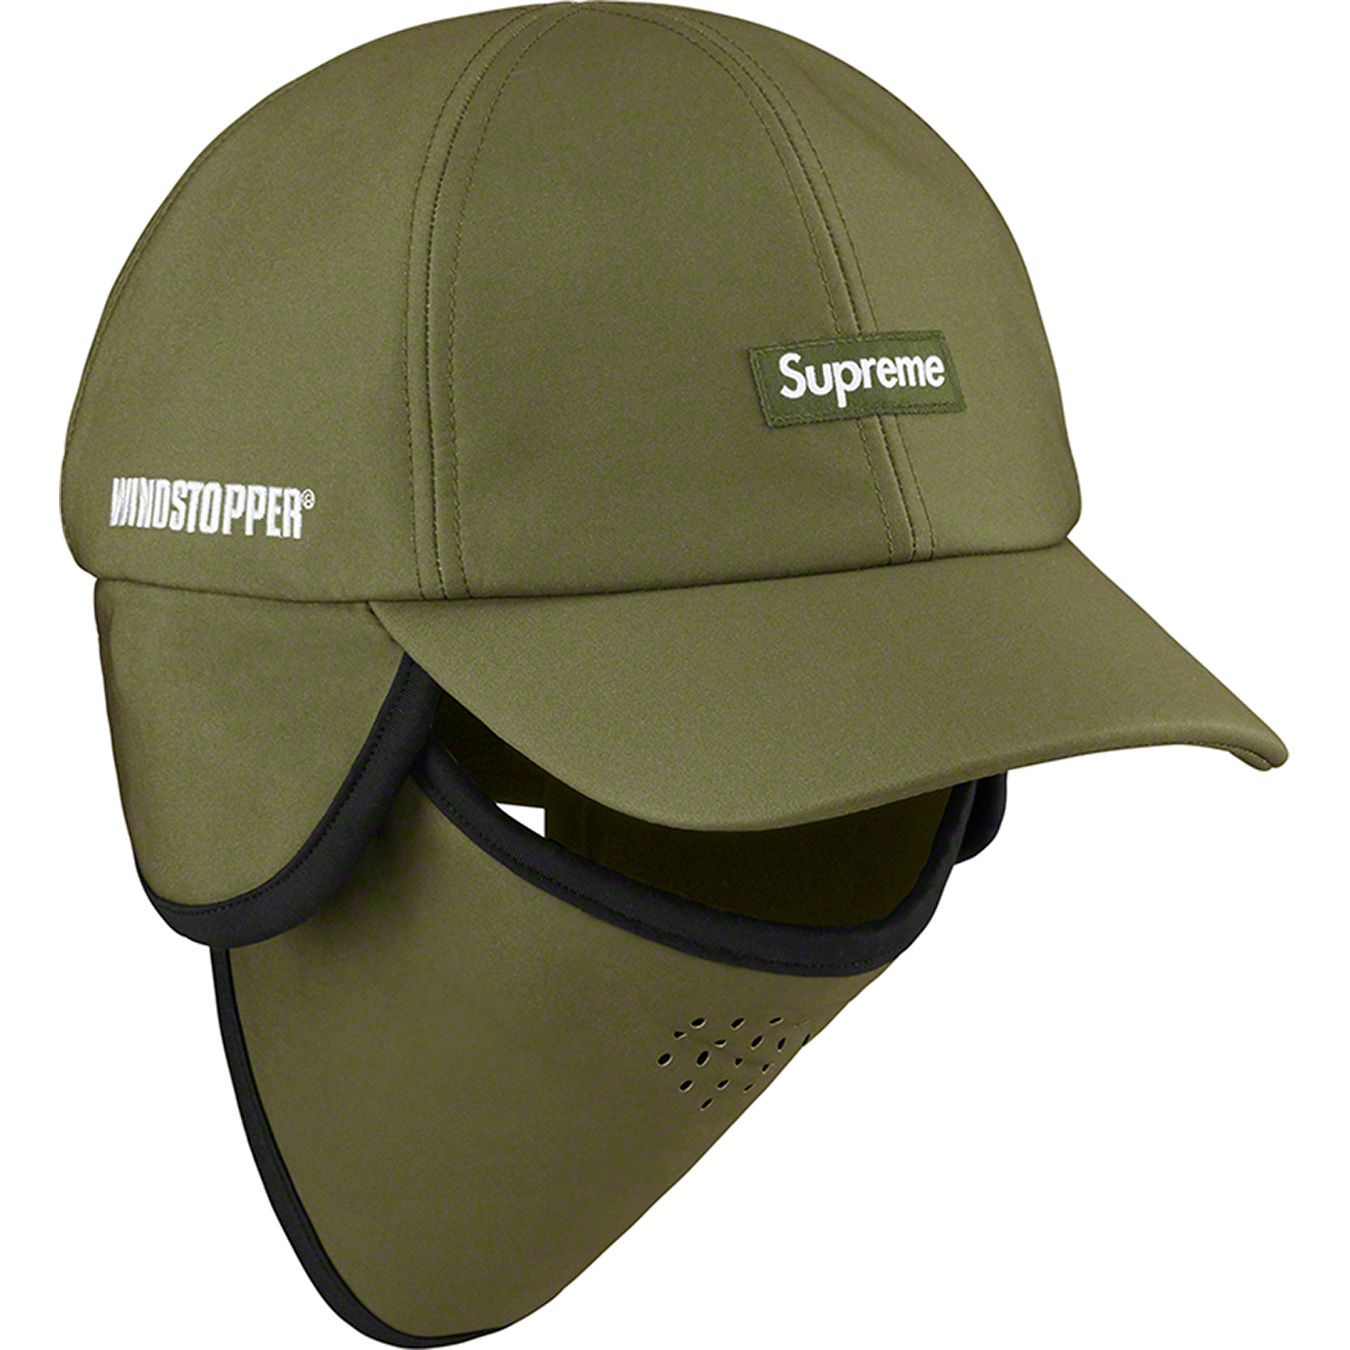 Supreme Gore Windstopper FW22 Face Mask Light Grey Brand New CONFIRMED